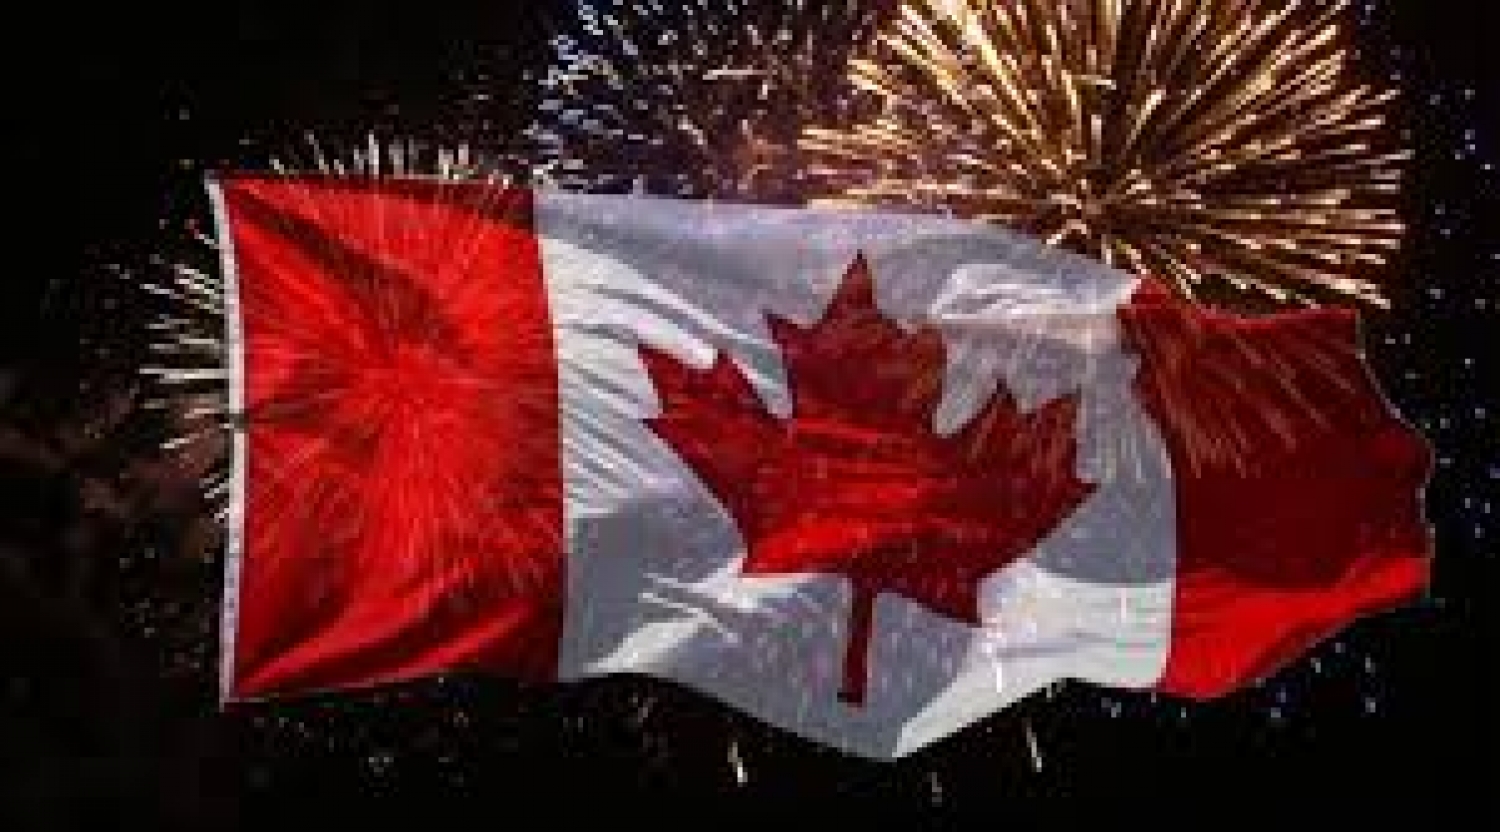 Canada Day Events in Regina - July 1, 2022